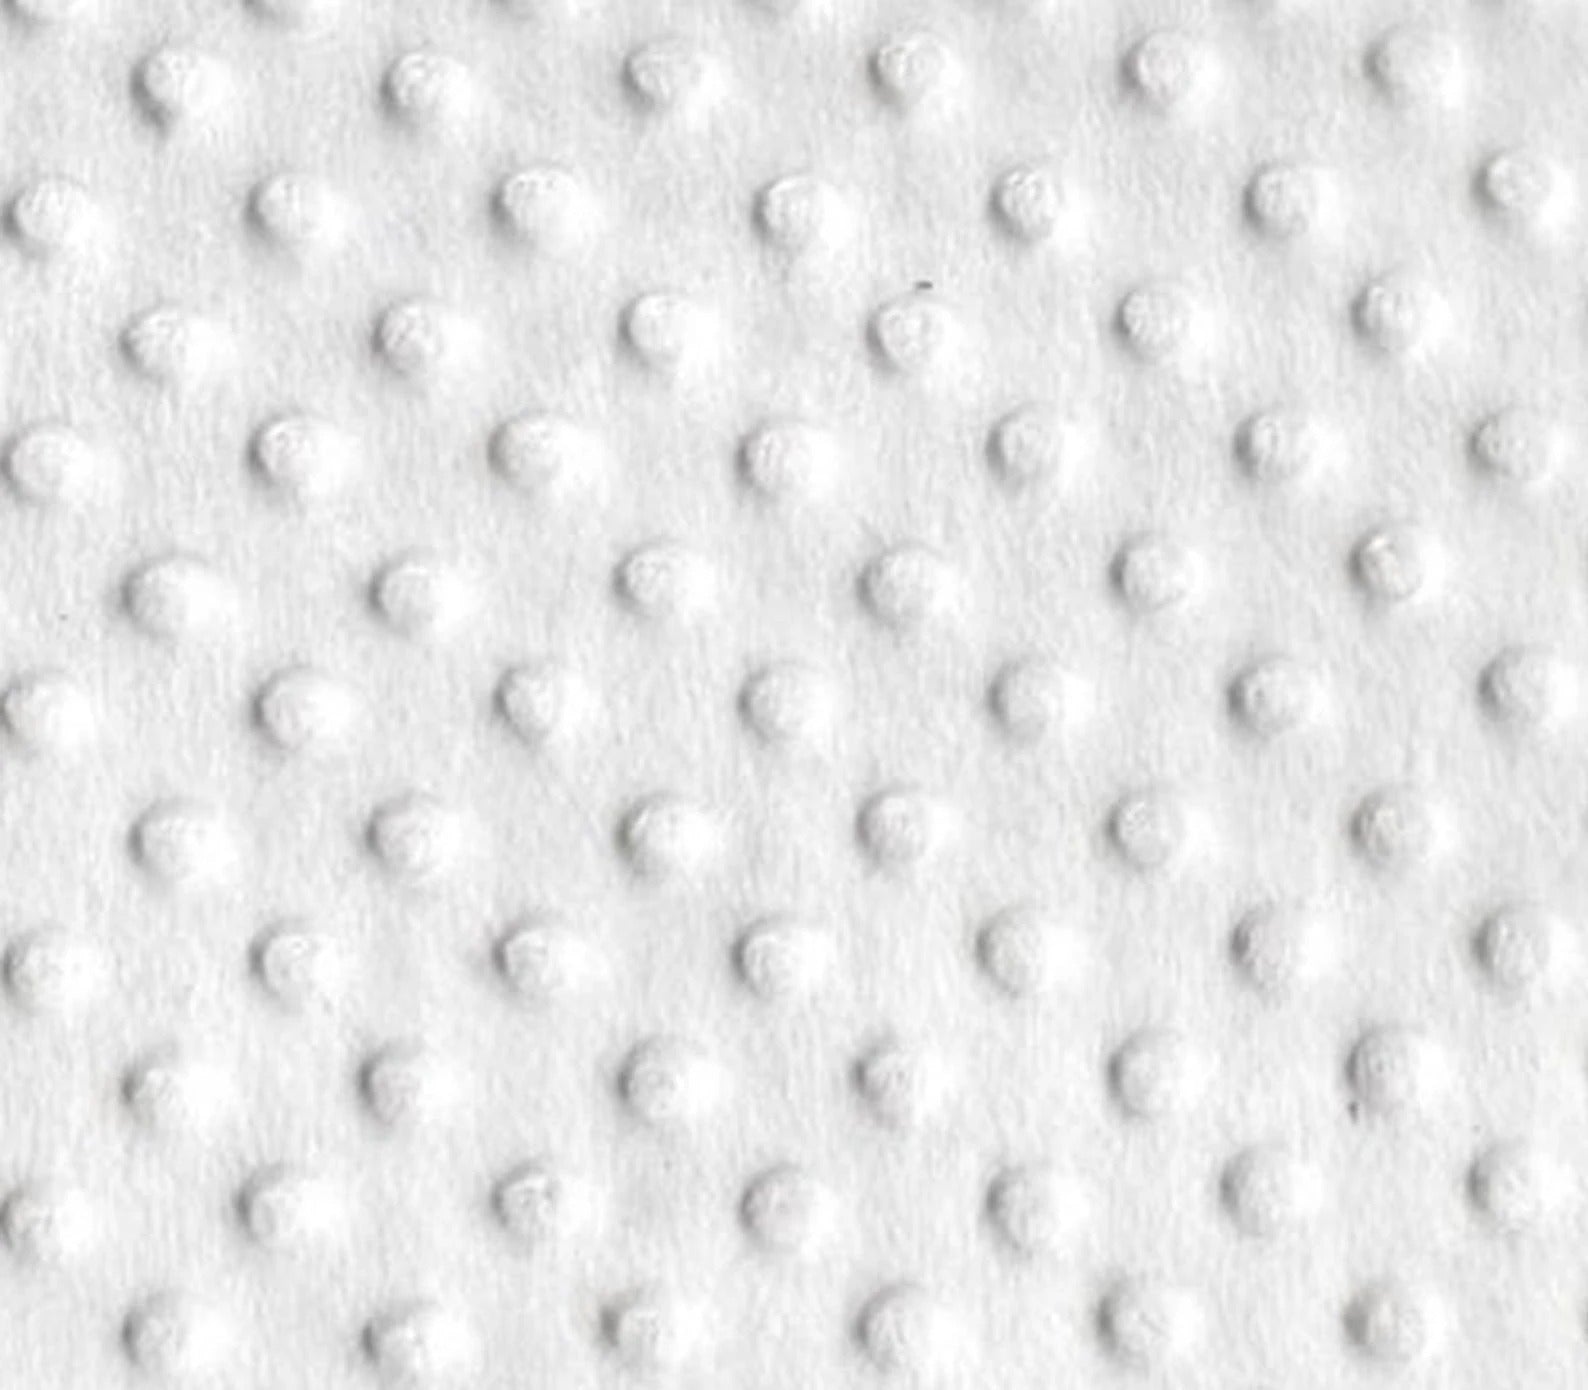 Bubble Polka Dot Minky Fabric By The Roll (20 Yards) Wholesale FabricMinkyICEFABRICICE FABRICSWhiteBy The Roll (60" Wide)Bubble Polka Dot Minky Fabric By The Roll (20 Yards) Wholesale Fabric ICEFABRIC White